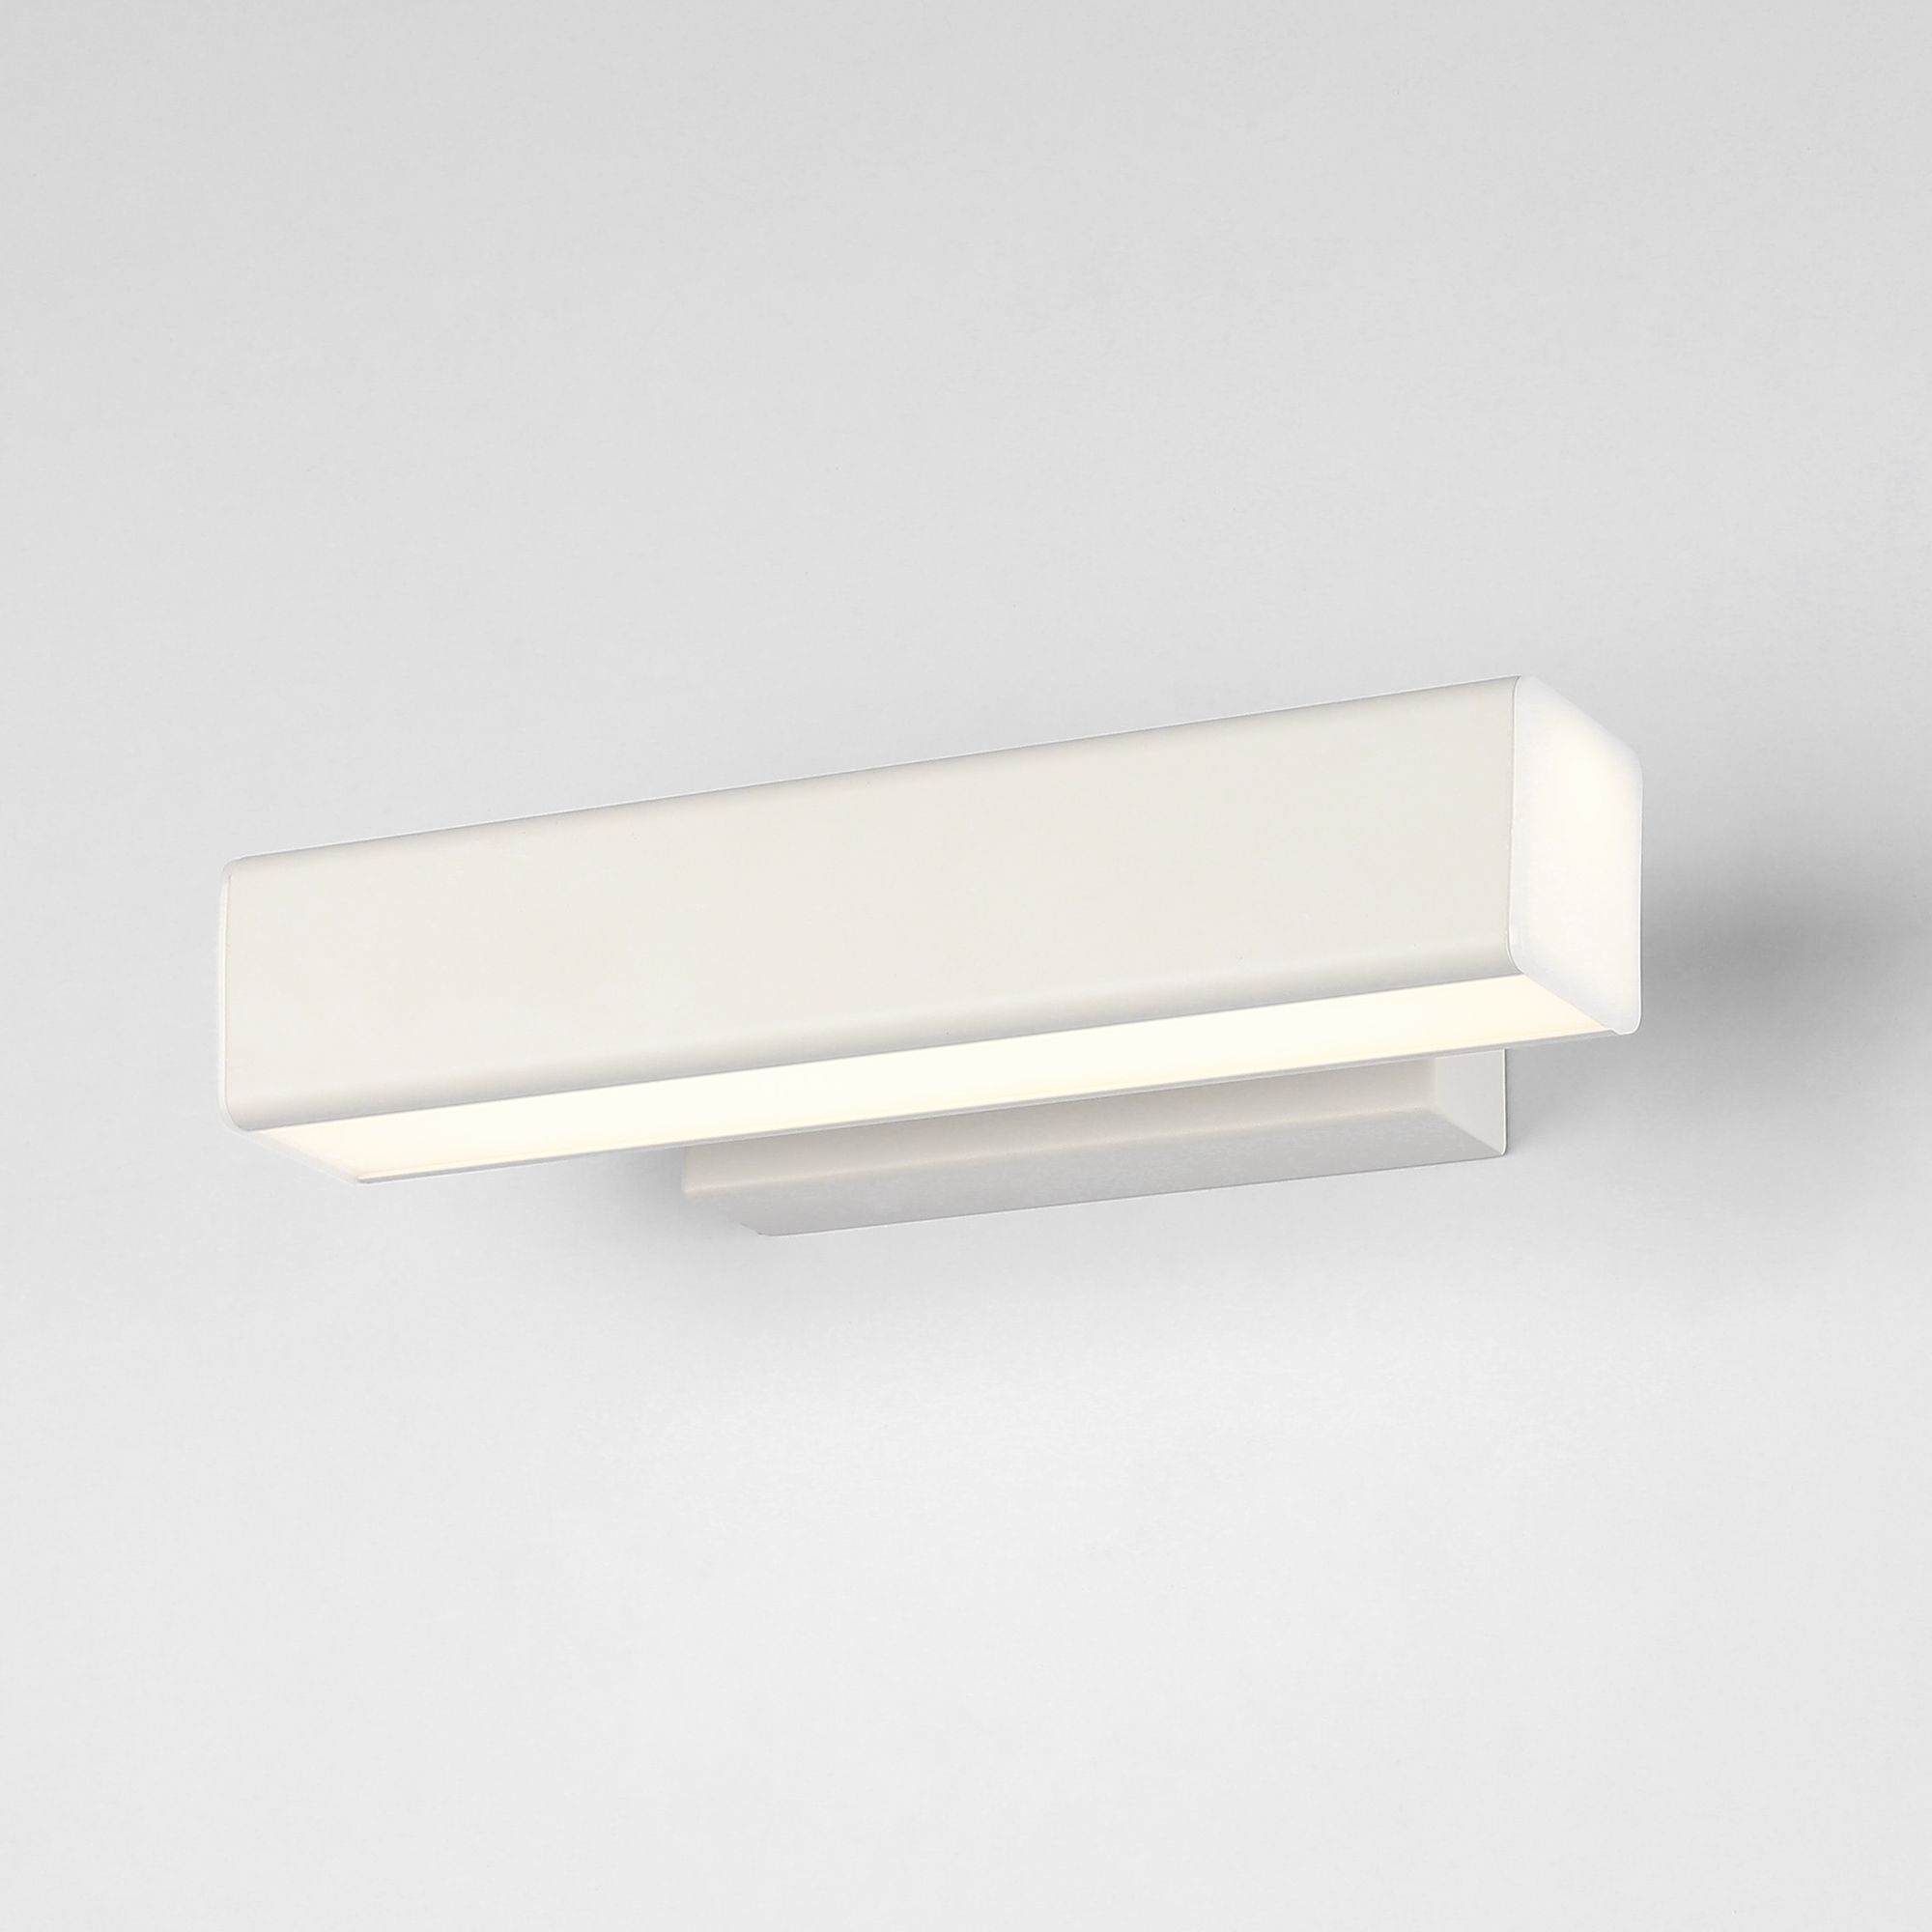 Настенный светодиодный светильник Elektrostandard Kessi Kessi LED белый (MRL LED 1007). Фото 1